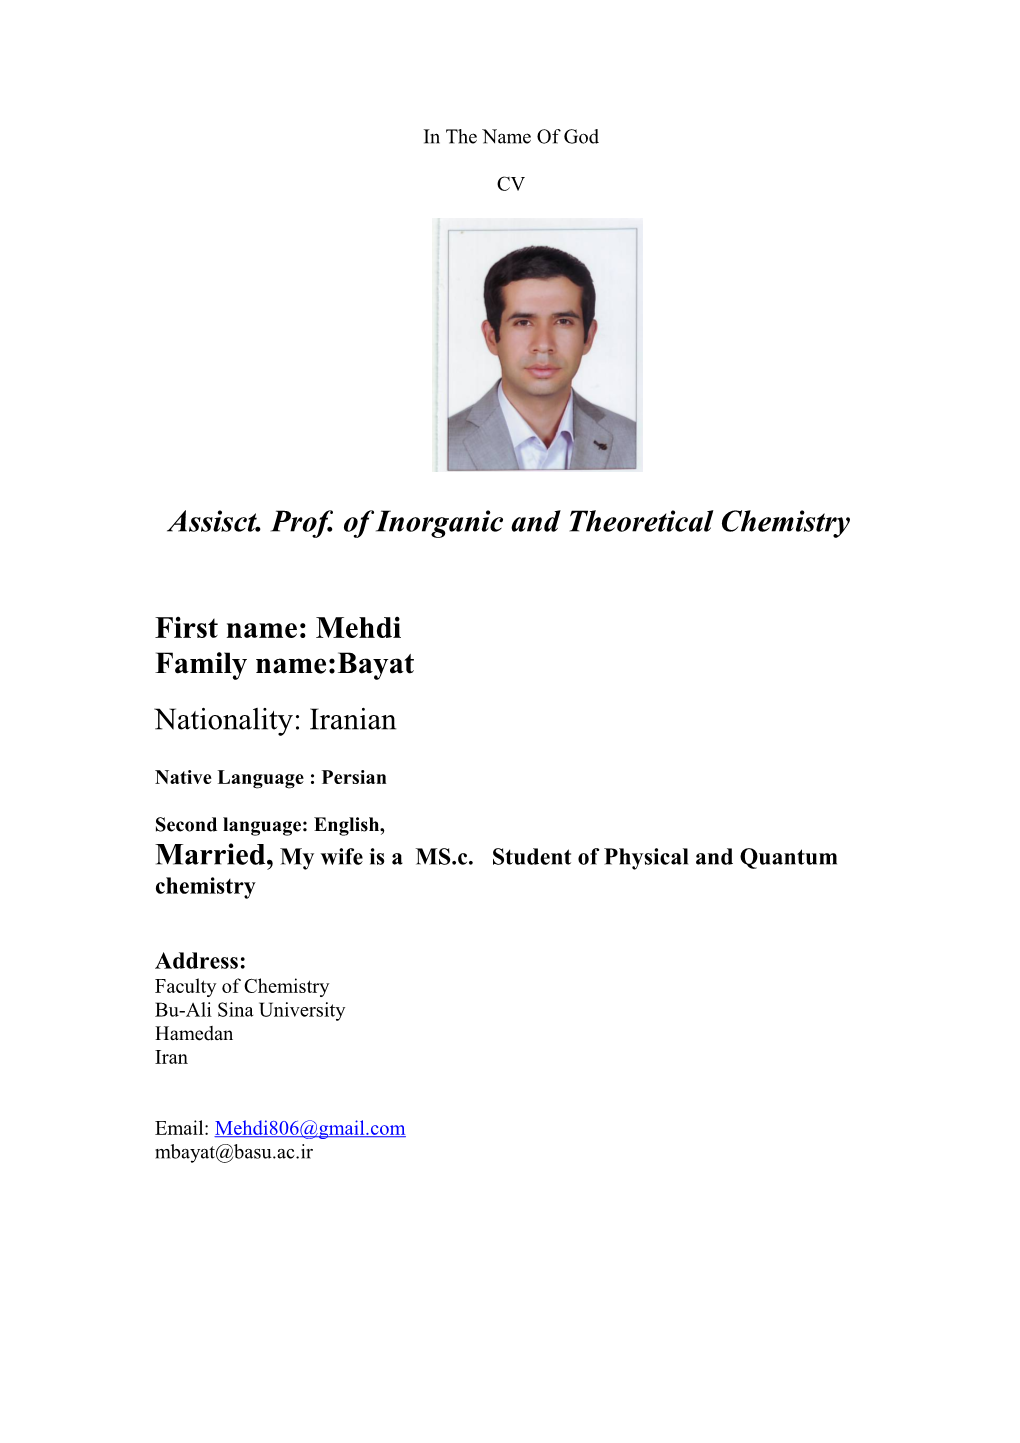 Assisct. Prof. of Inorganic and Theoretical Chemistry